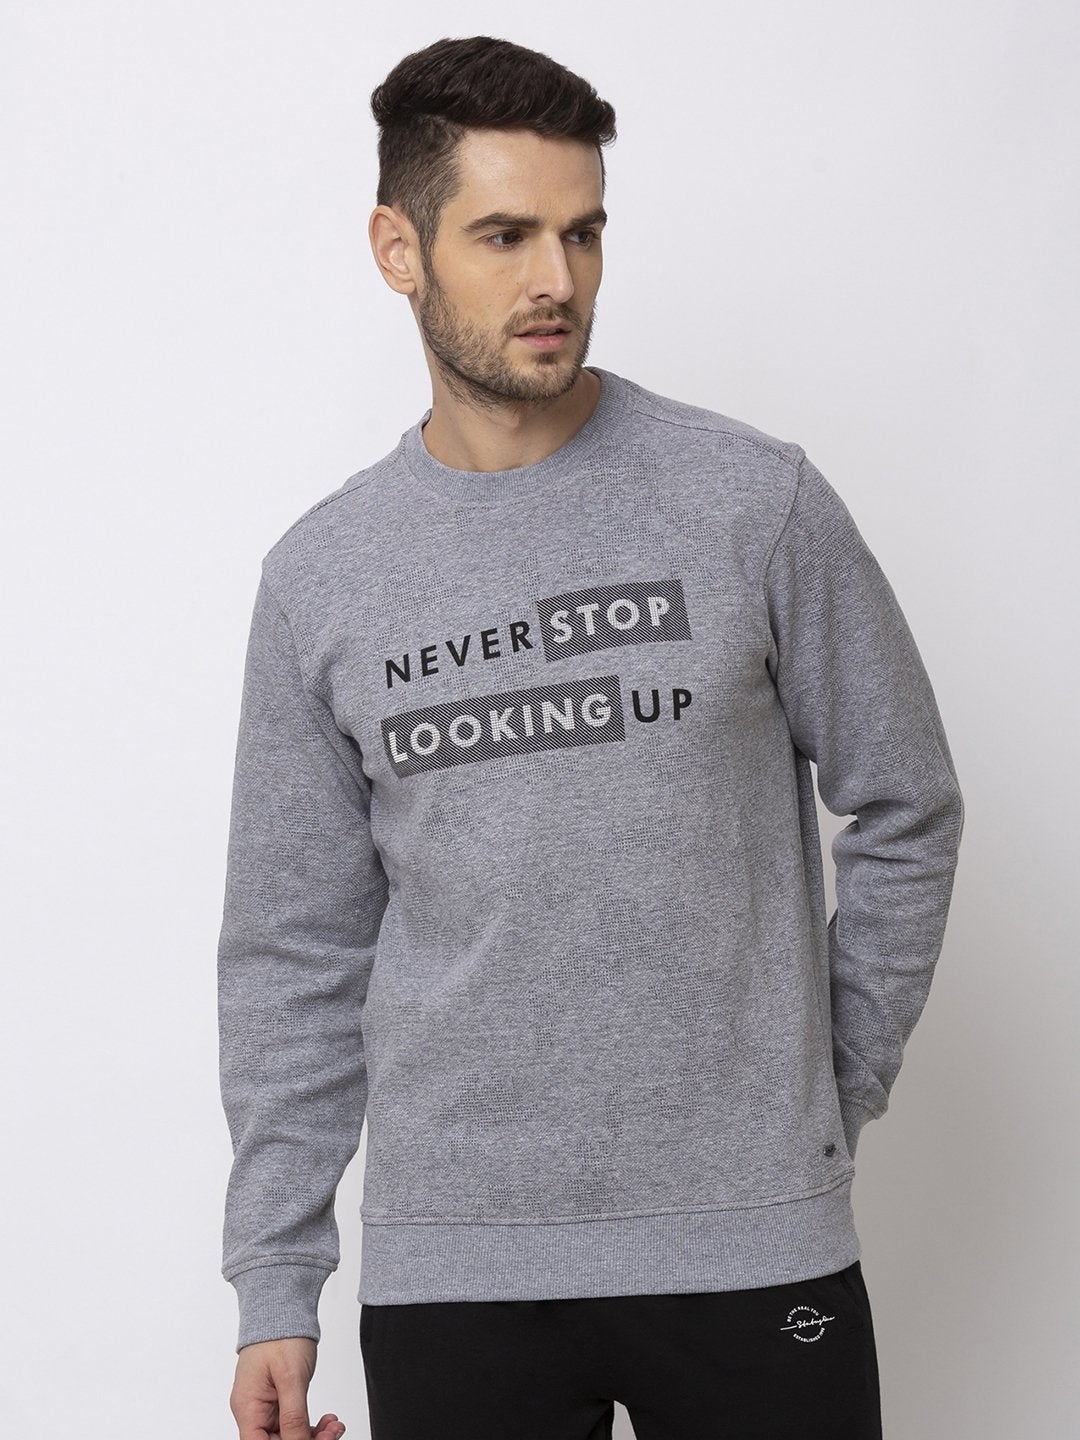 Men's Grey Polycotton Printed Sweatshirts